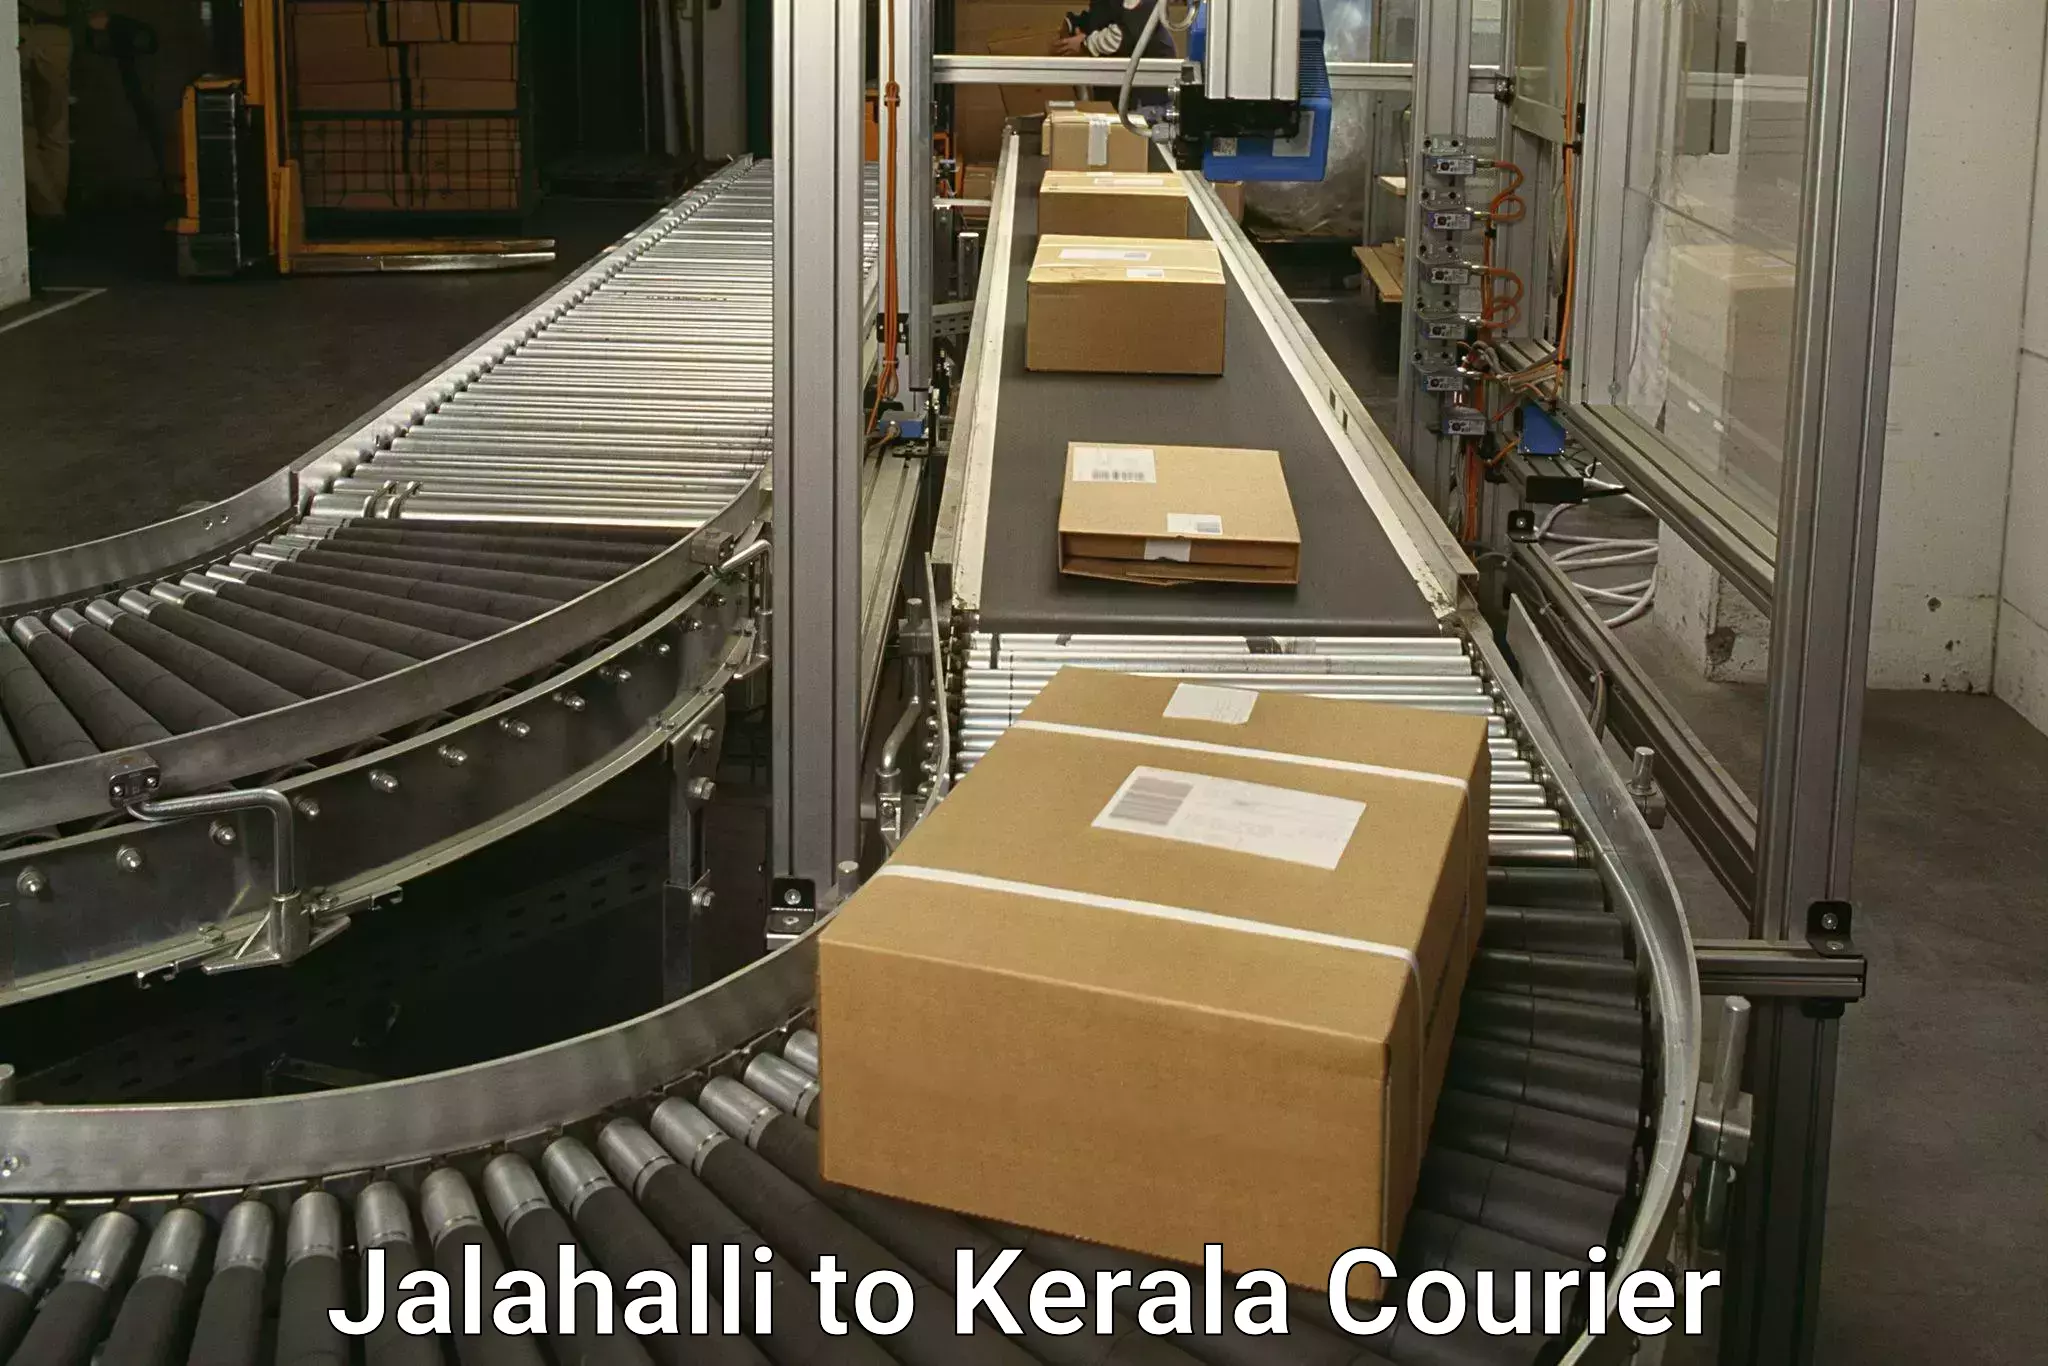 Modern courier technology Jalahalli to Kerala